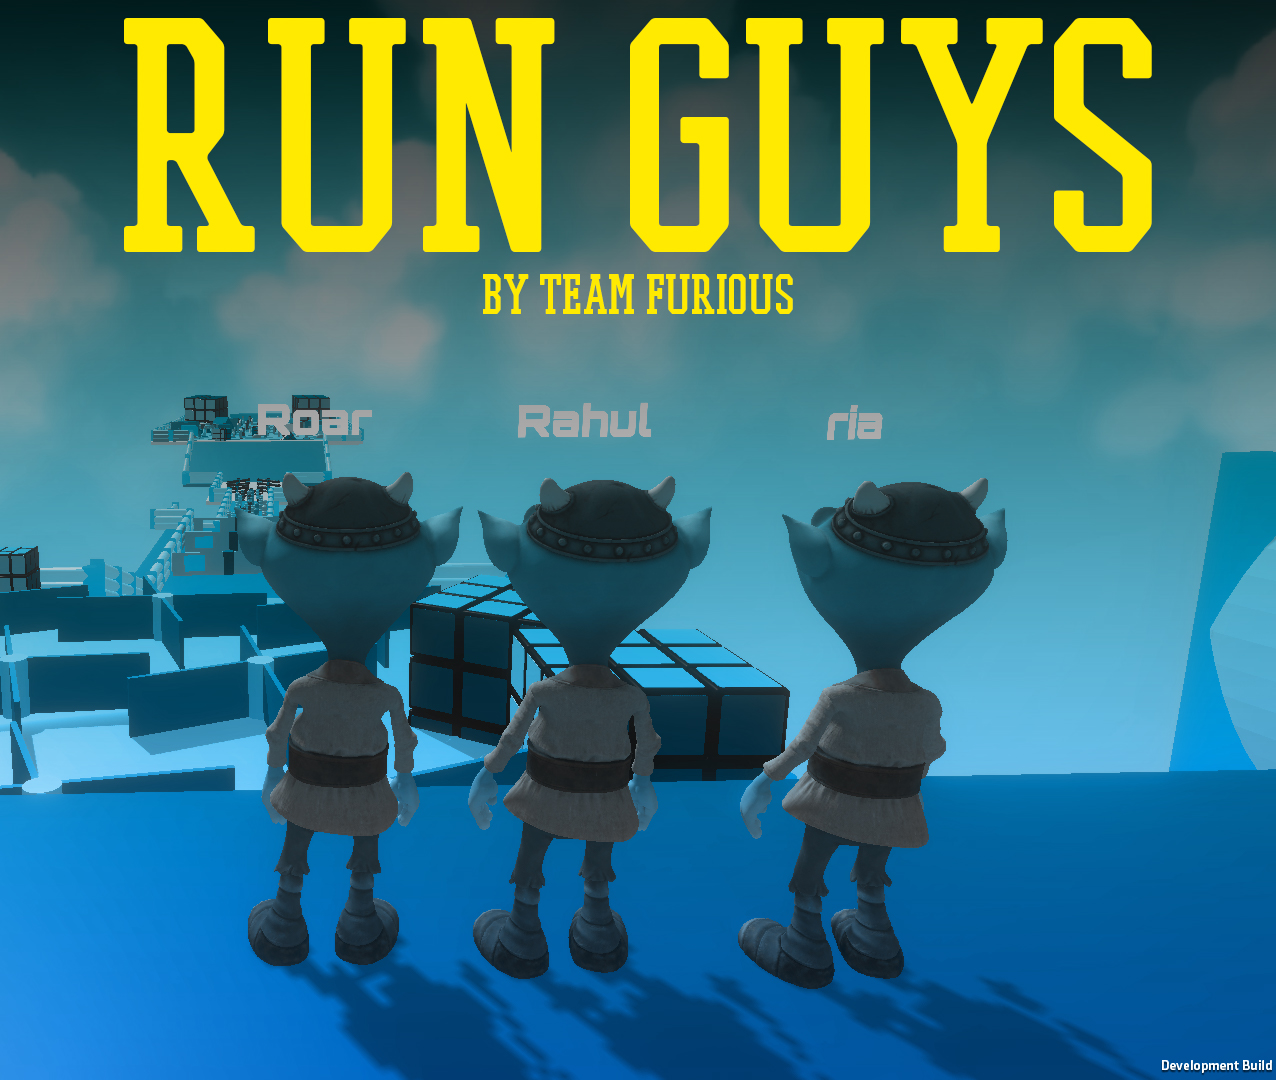 runGuys_by team furious